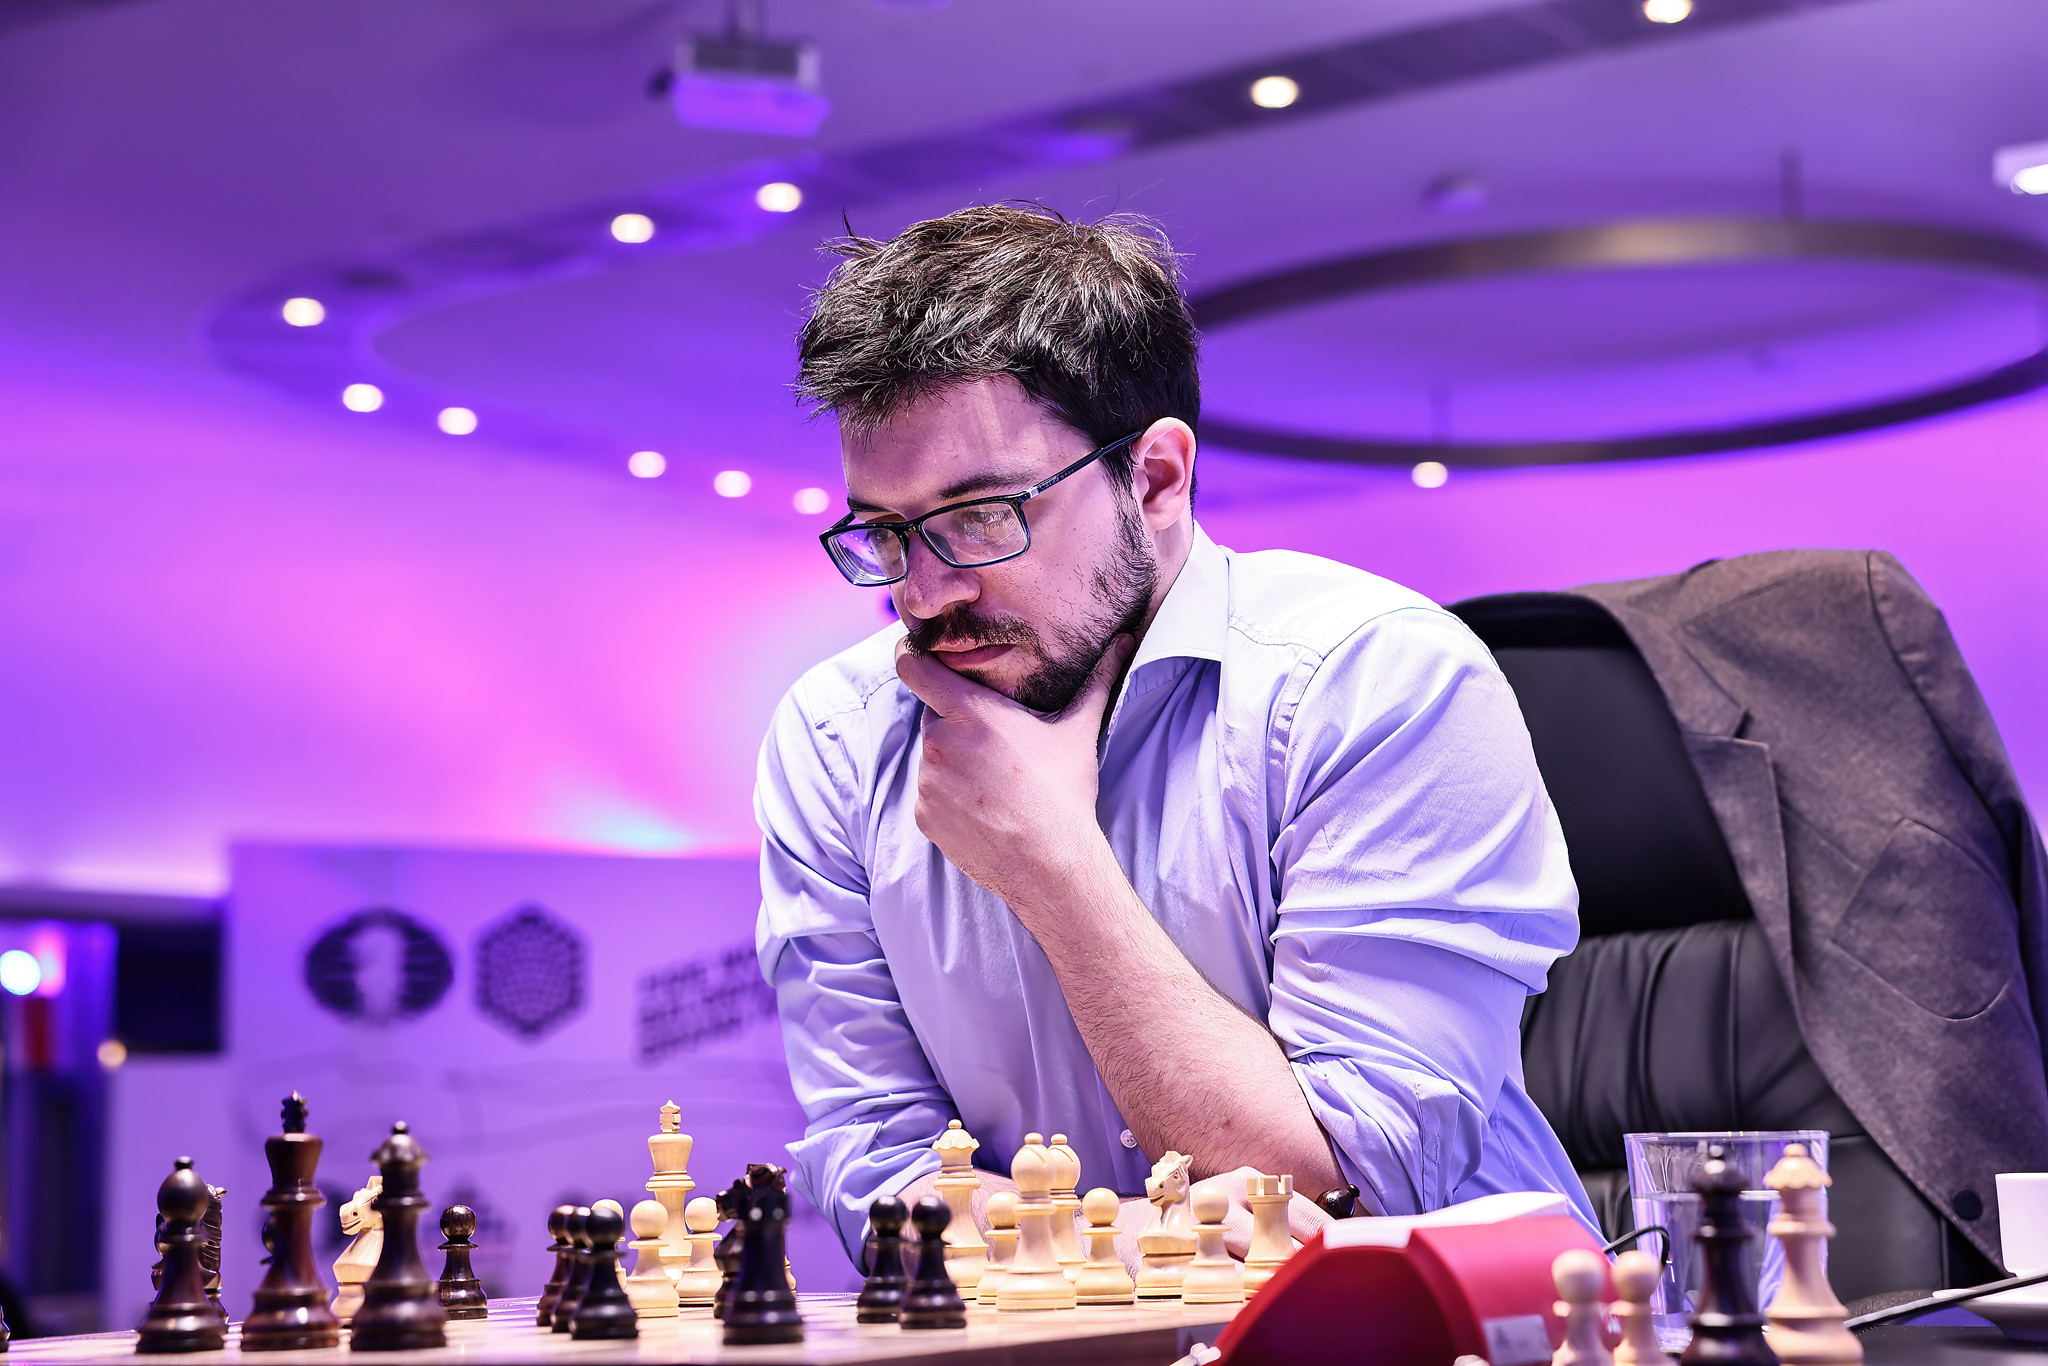 World Champion! - MVL - Maxime Vachier-Lagrave, Chess player